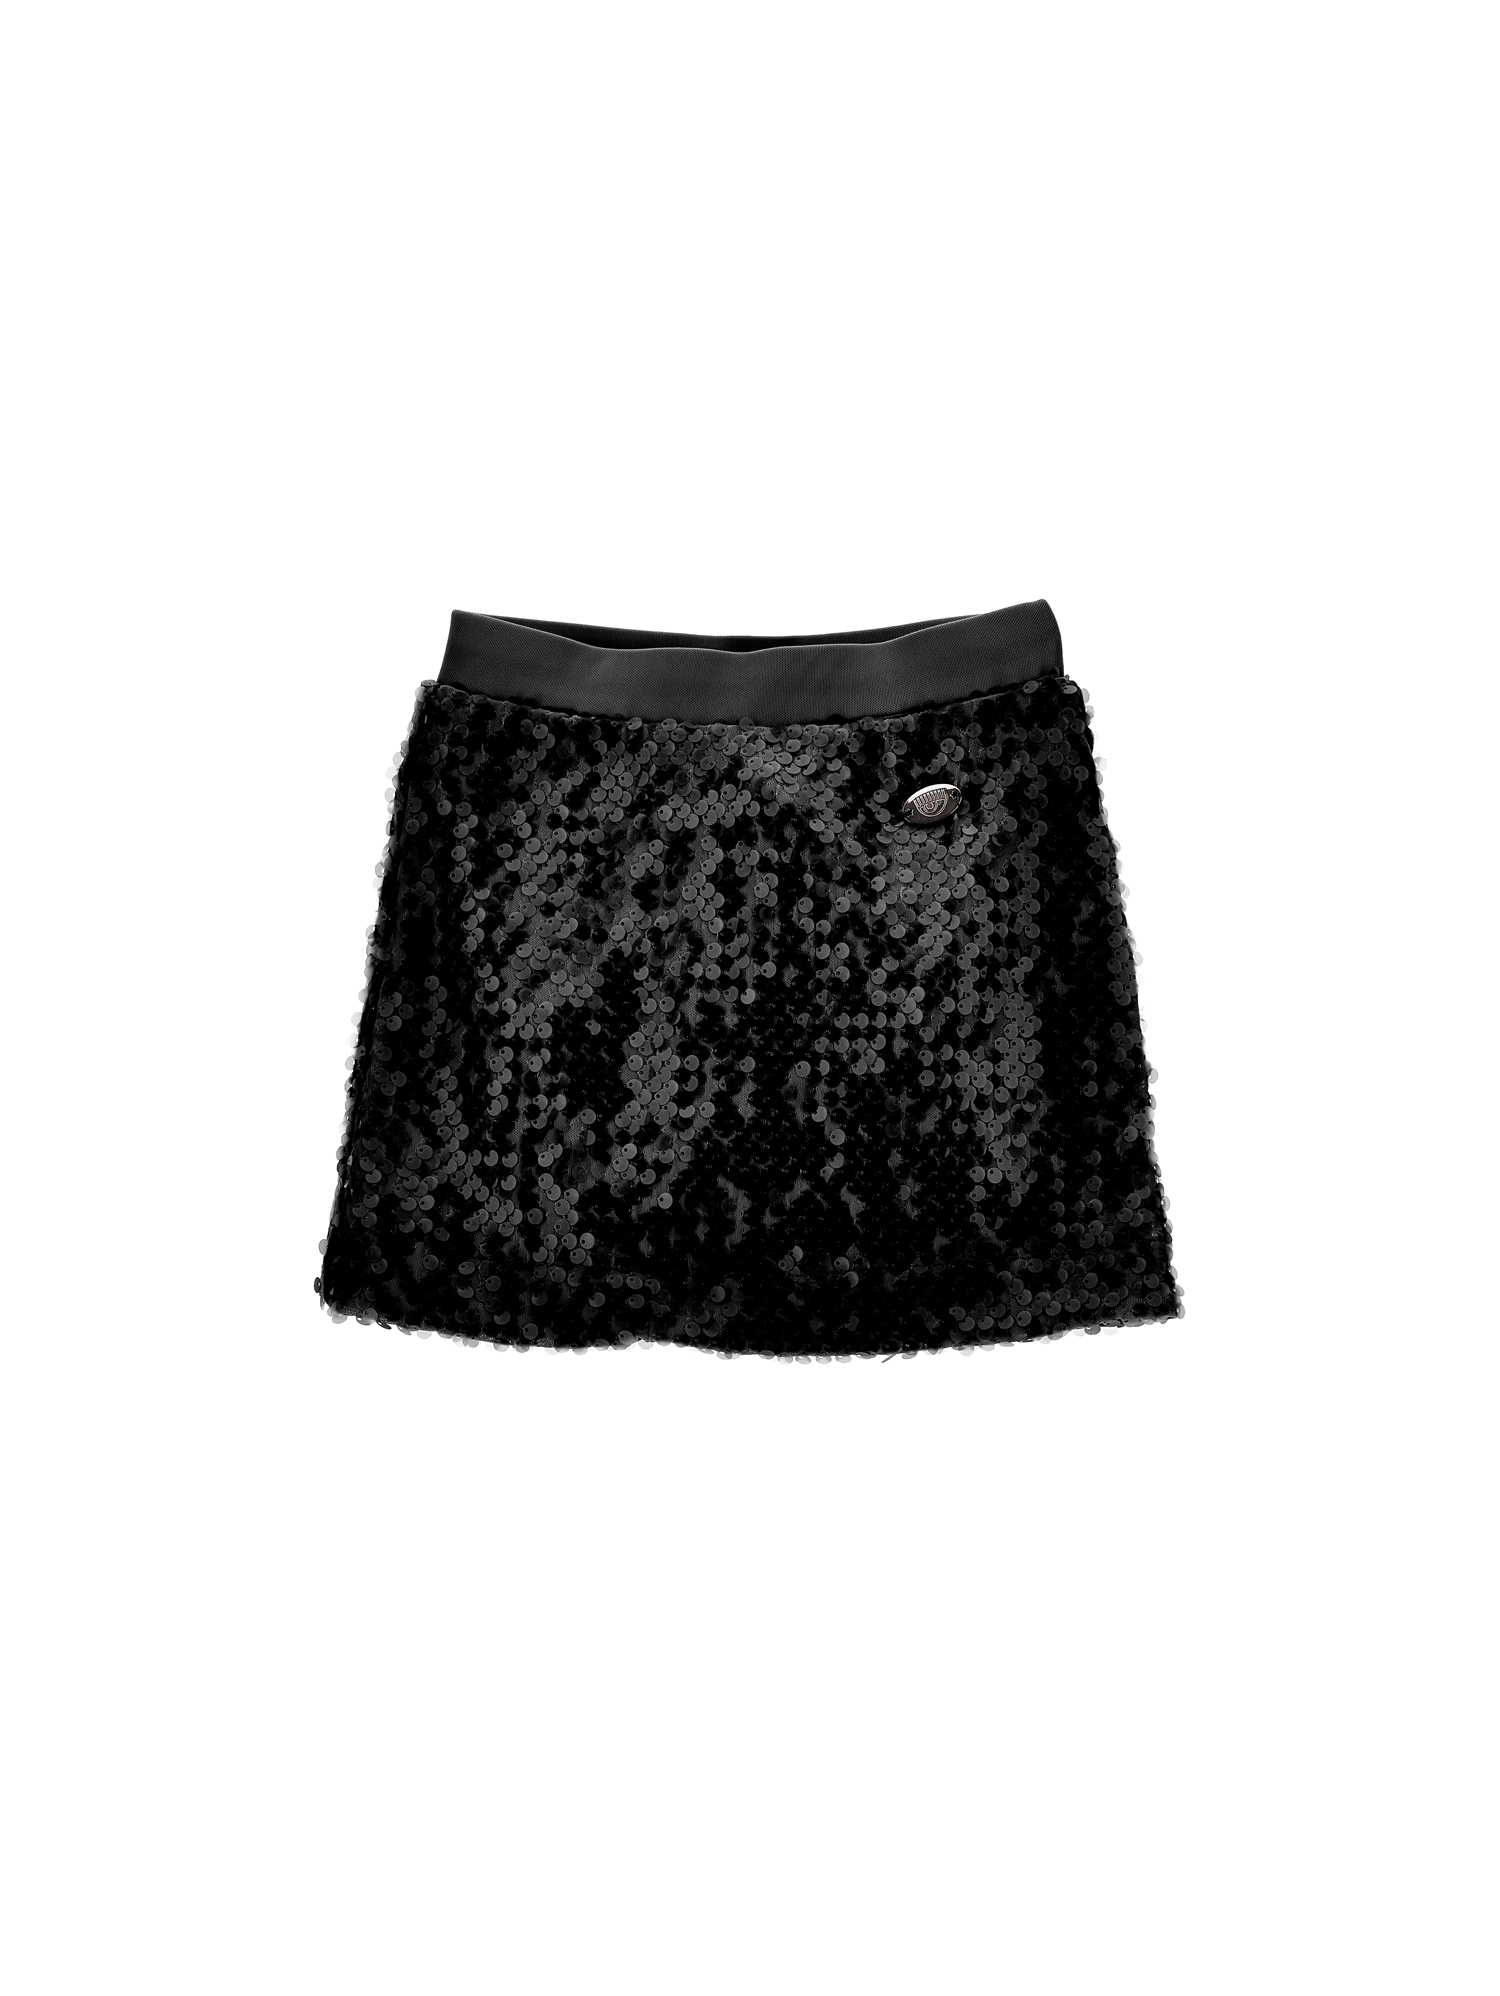 Chiara Ferragni Cf Party Sequin Skirt In Black